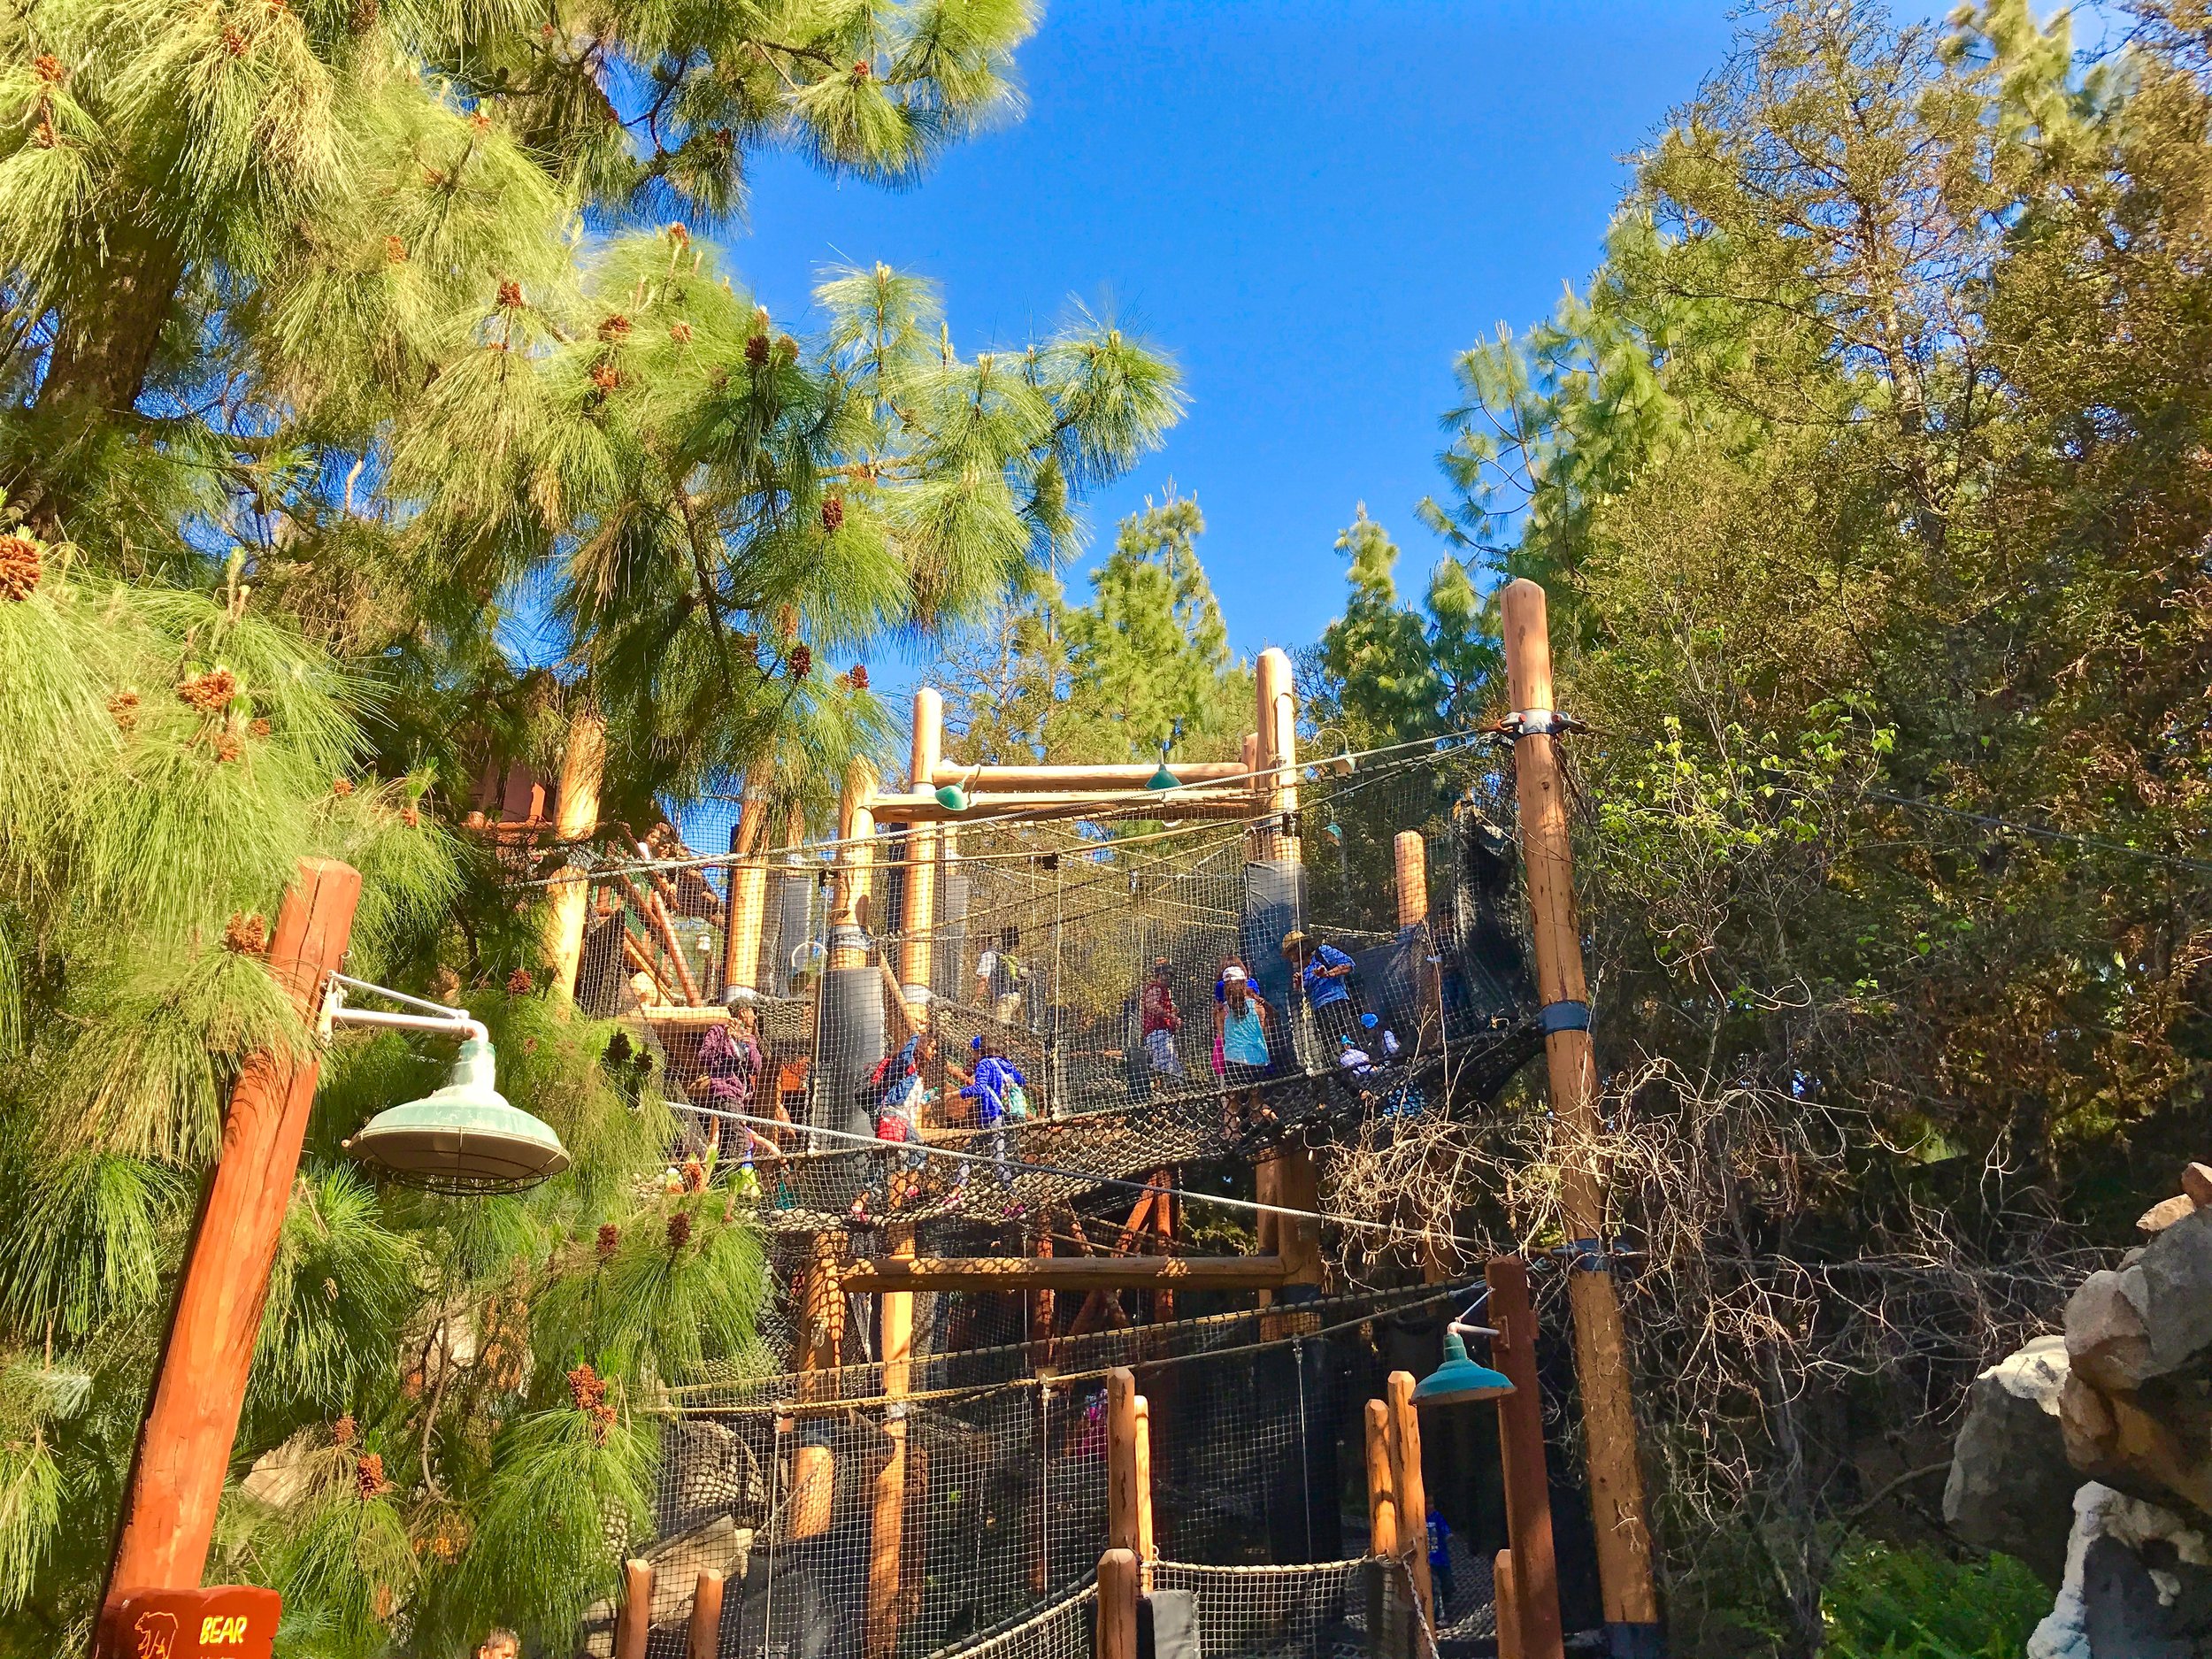 Redwood+Creek+Challenge+Trail+Disneyland.jpgRedwood+Creek+Challenge+Trail+Disneyland